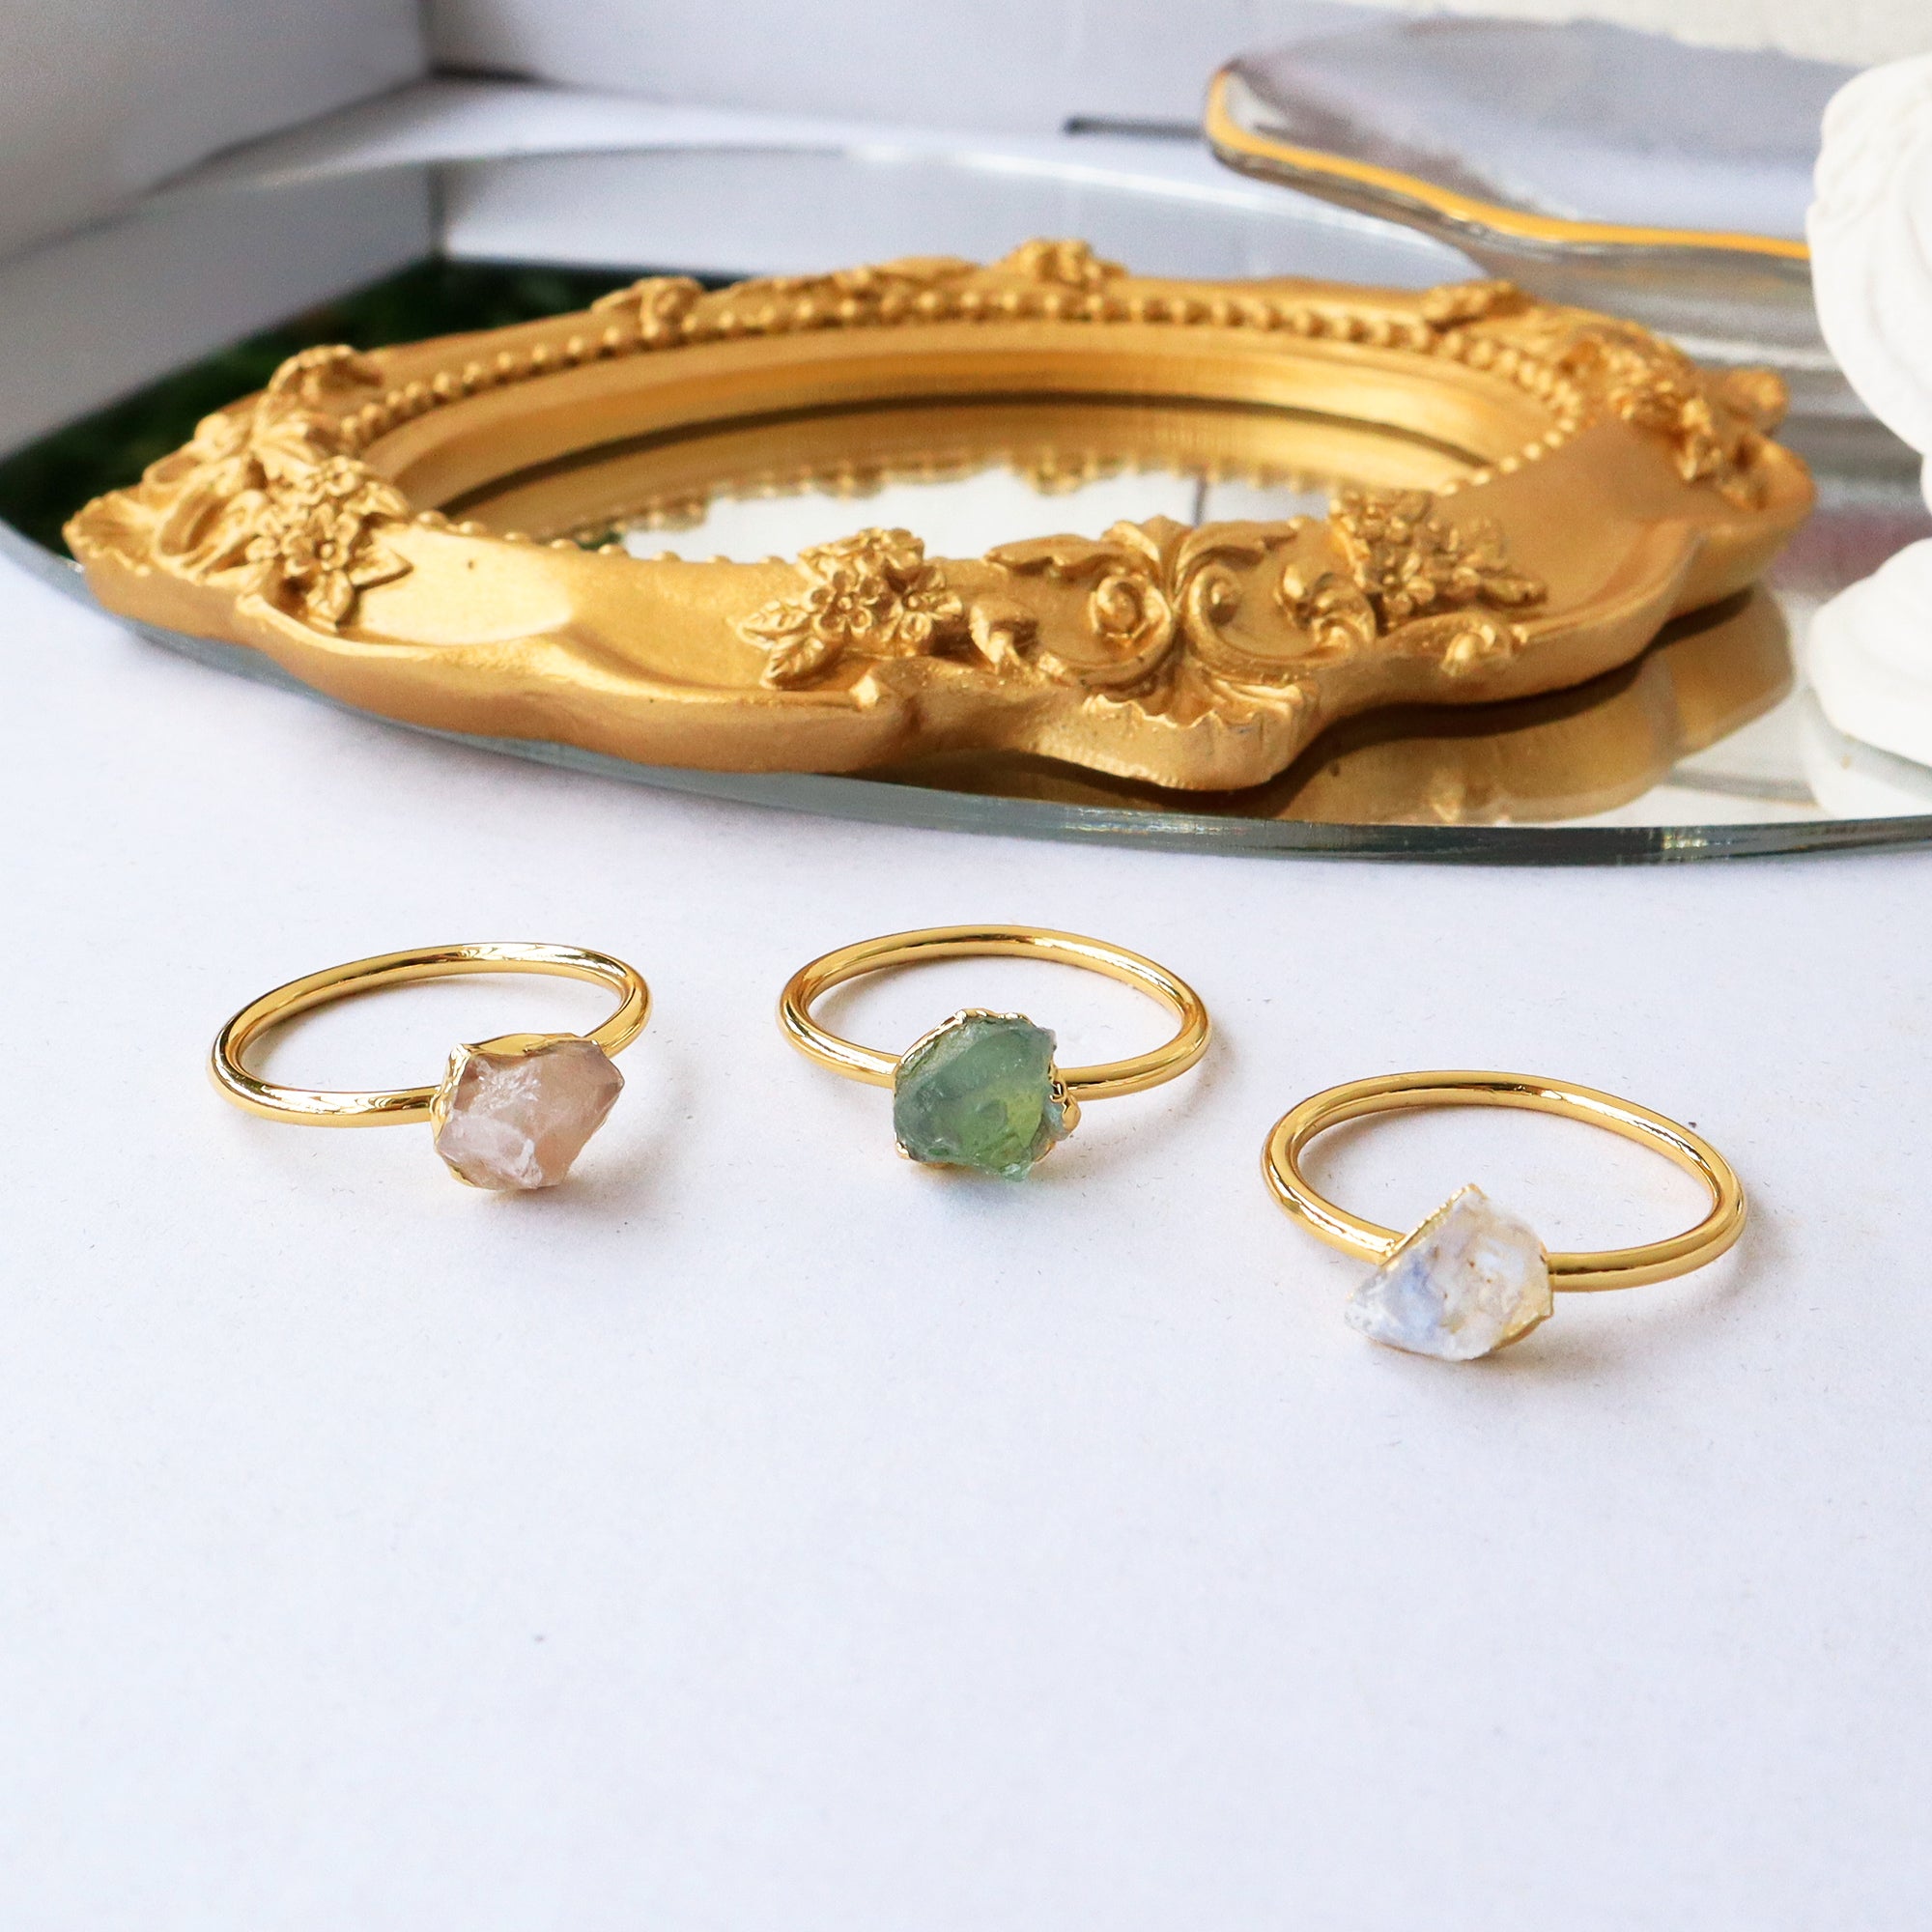 Gold Plated Brass Raw Rainbow Gemstone Ring, Birthstone Ring, Healing Crystal Stone Statement Ring Jewelry BT003